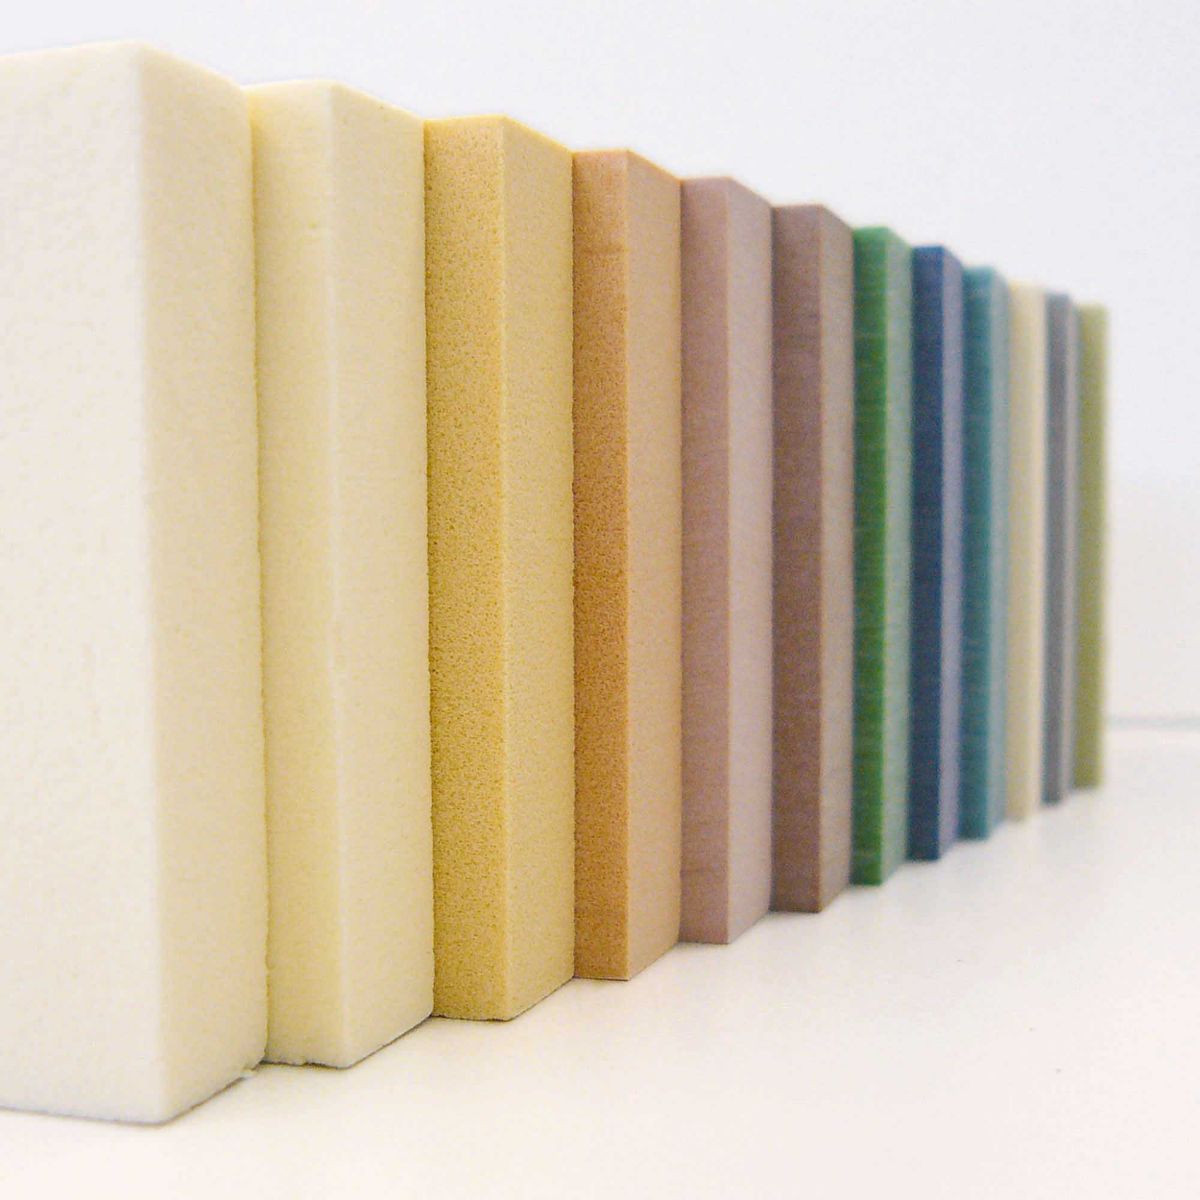 PU Foam, Model Board, Tooling Board and Blocks - Easy Composites